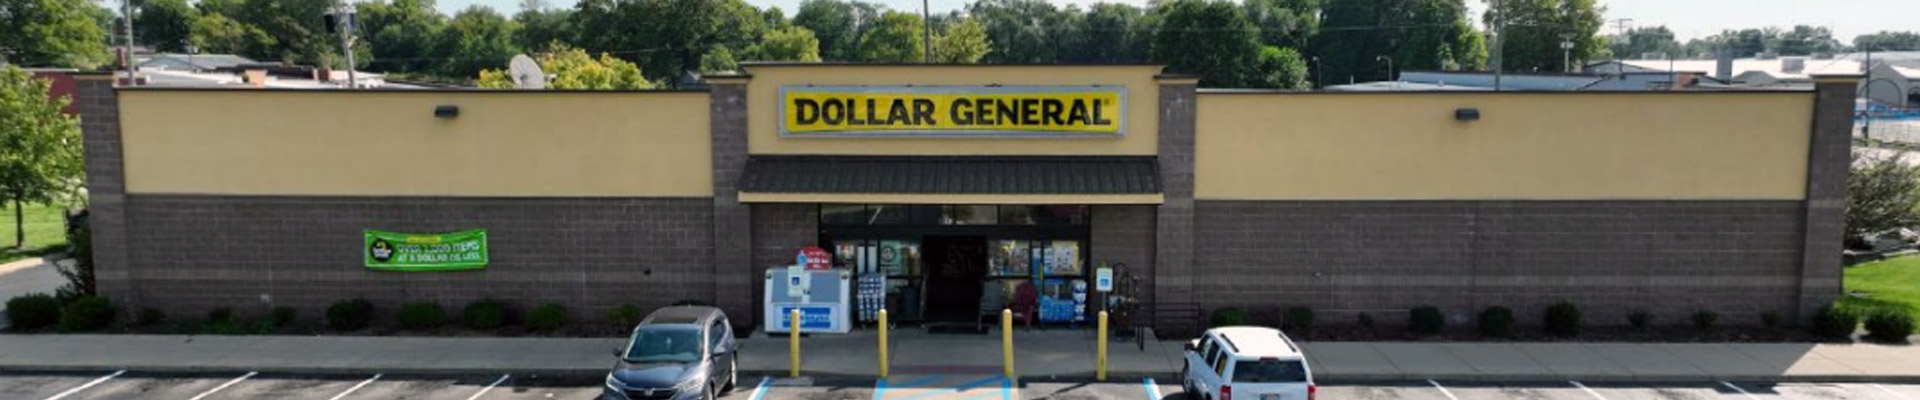 Dollar General Shelbyville In 1